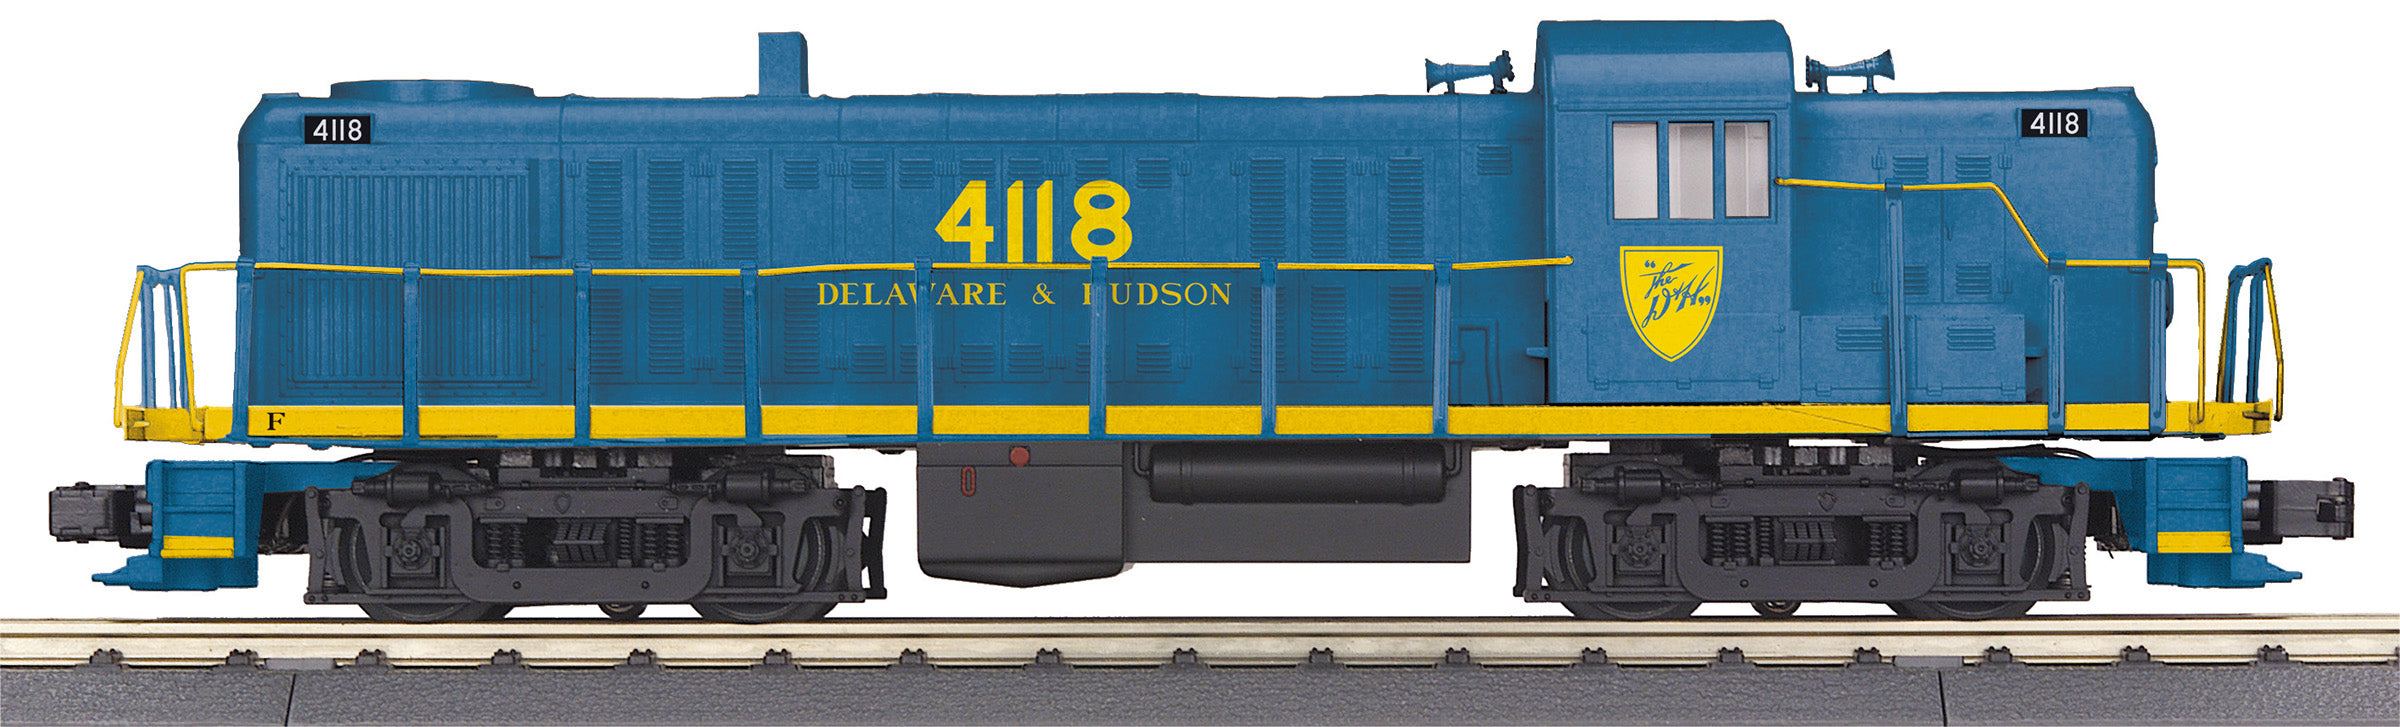 MTH 30-21211-1 - RS-3 Diesel Engine "Delaware & Hudson" #4118 w/ PS3